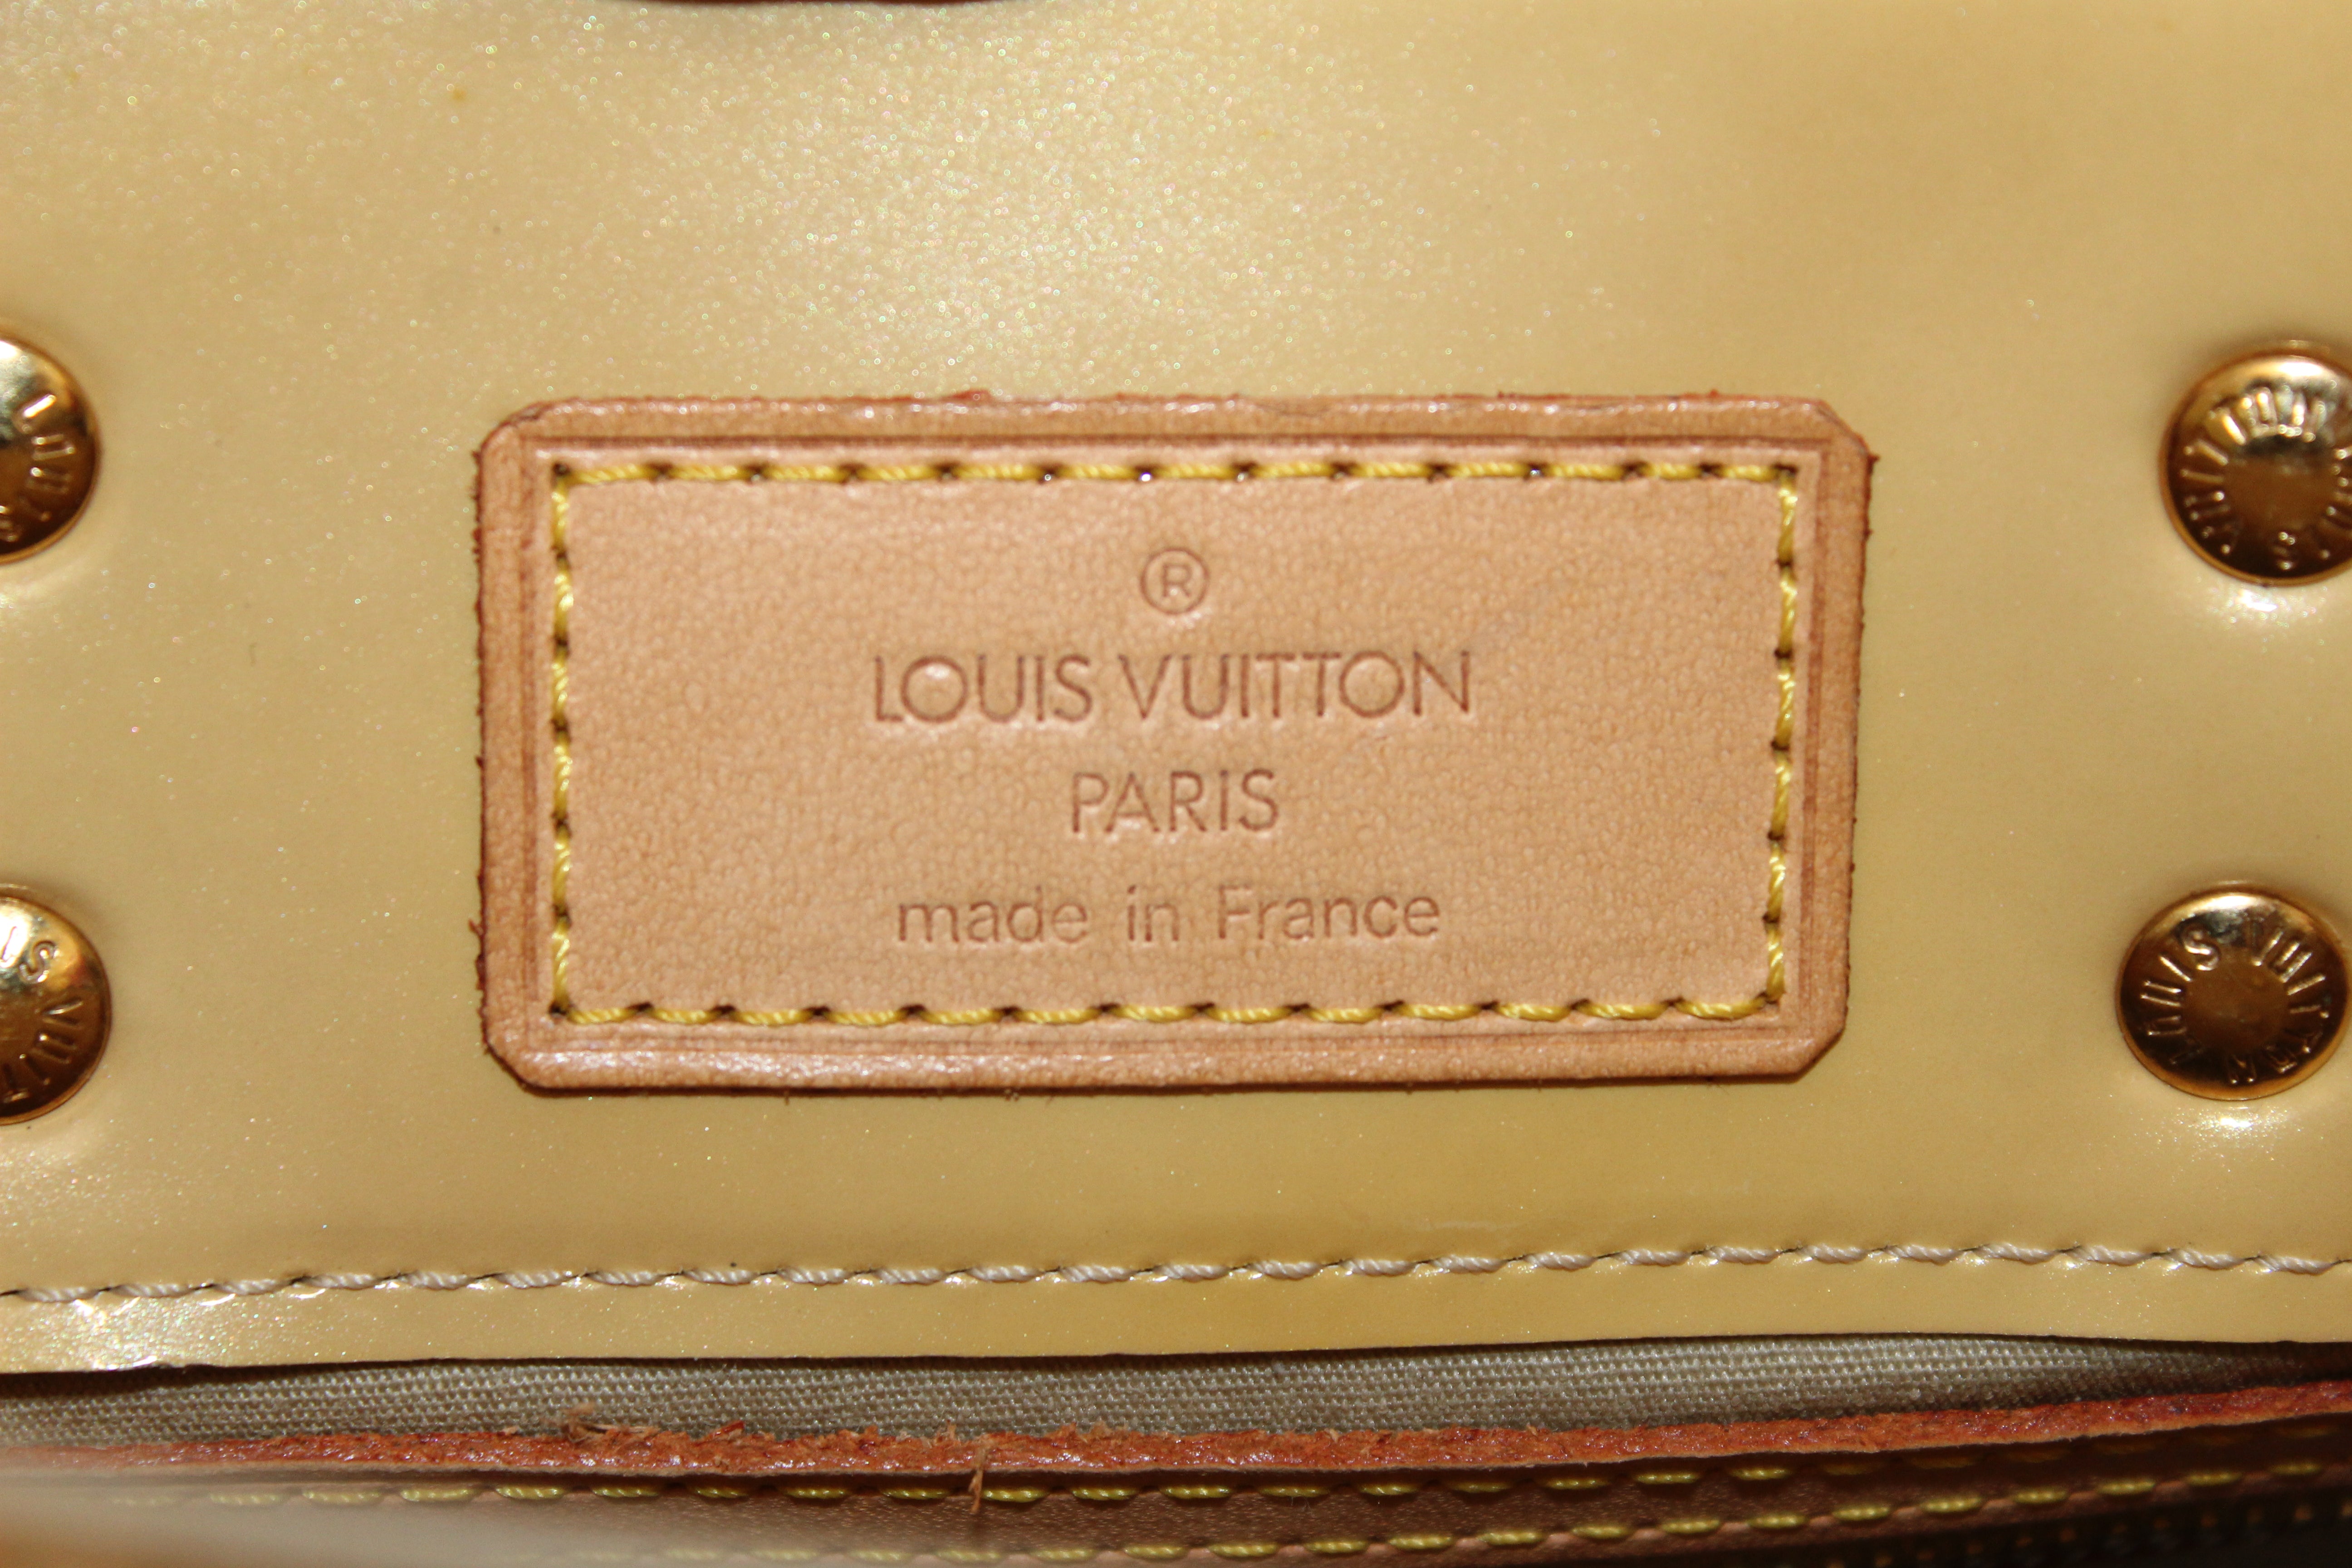 Authentic Louis Vuitton Beige Monogram Vernis Patent Leather Reade PM Bag